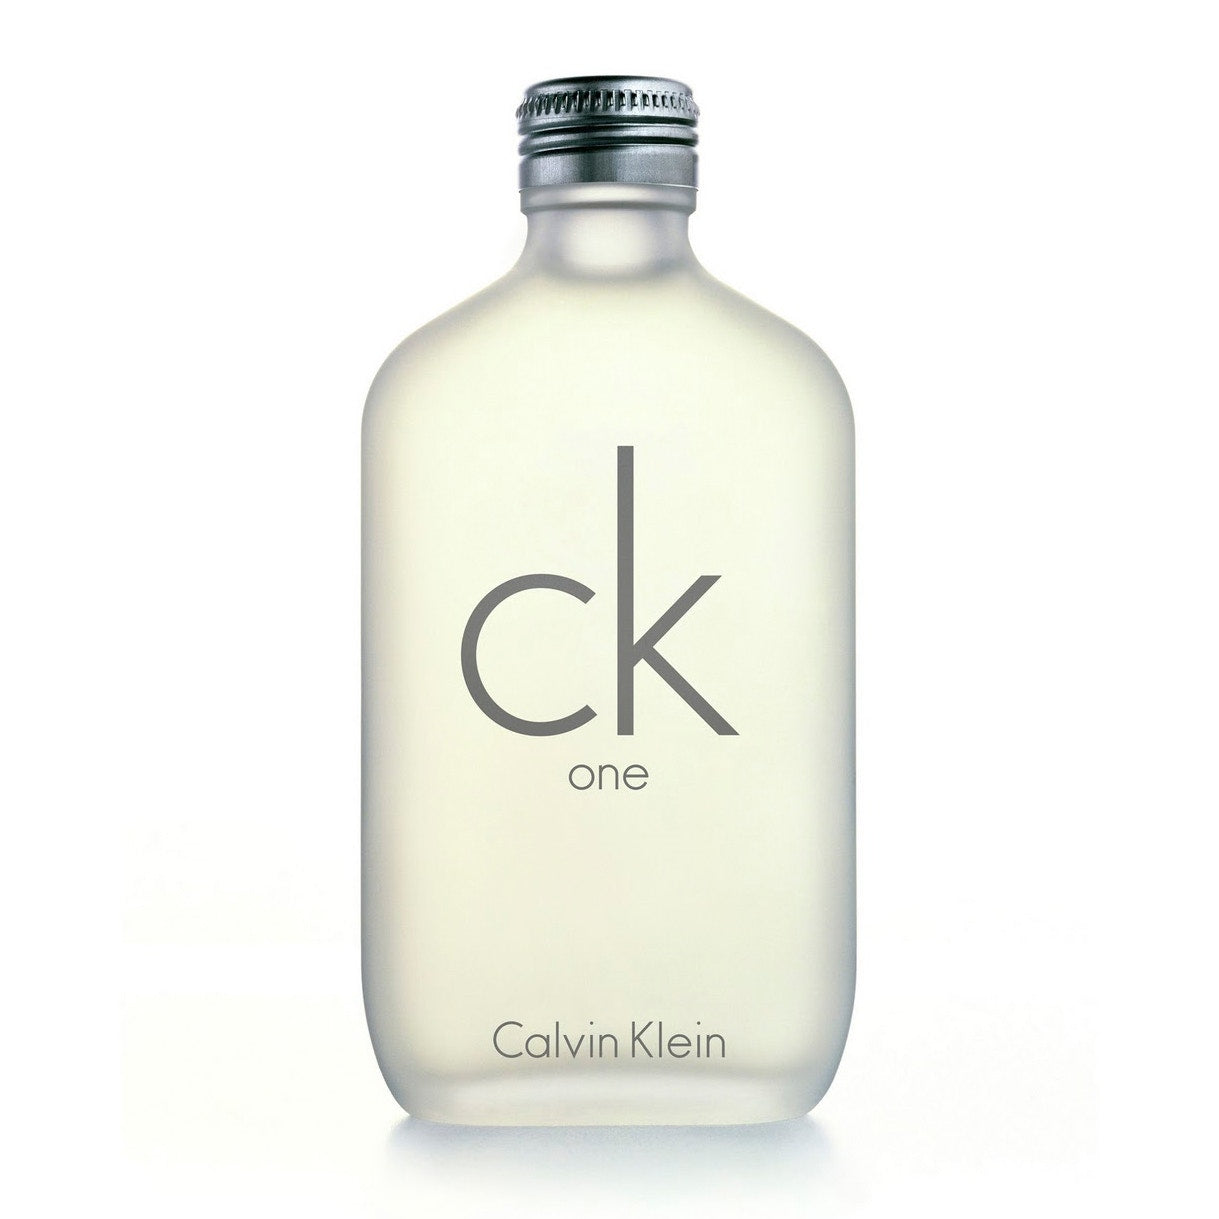 Calvin Klein CK One Eau de Toilette Spray 100ml Image